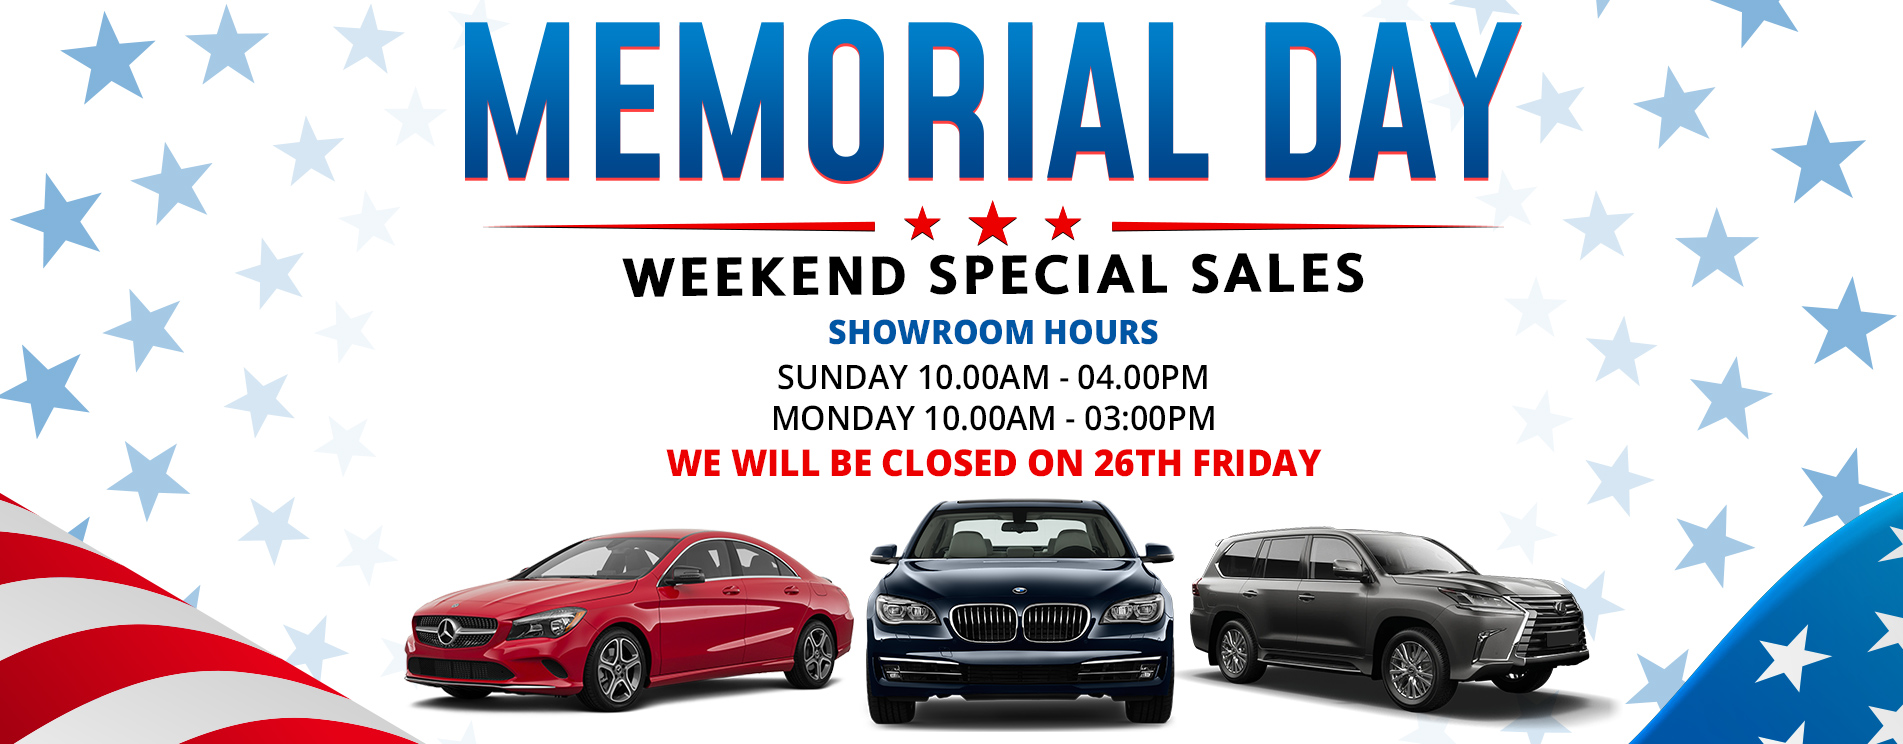 Memorial Day Weekend Special Sales